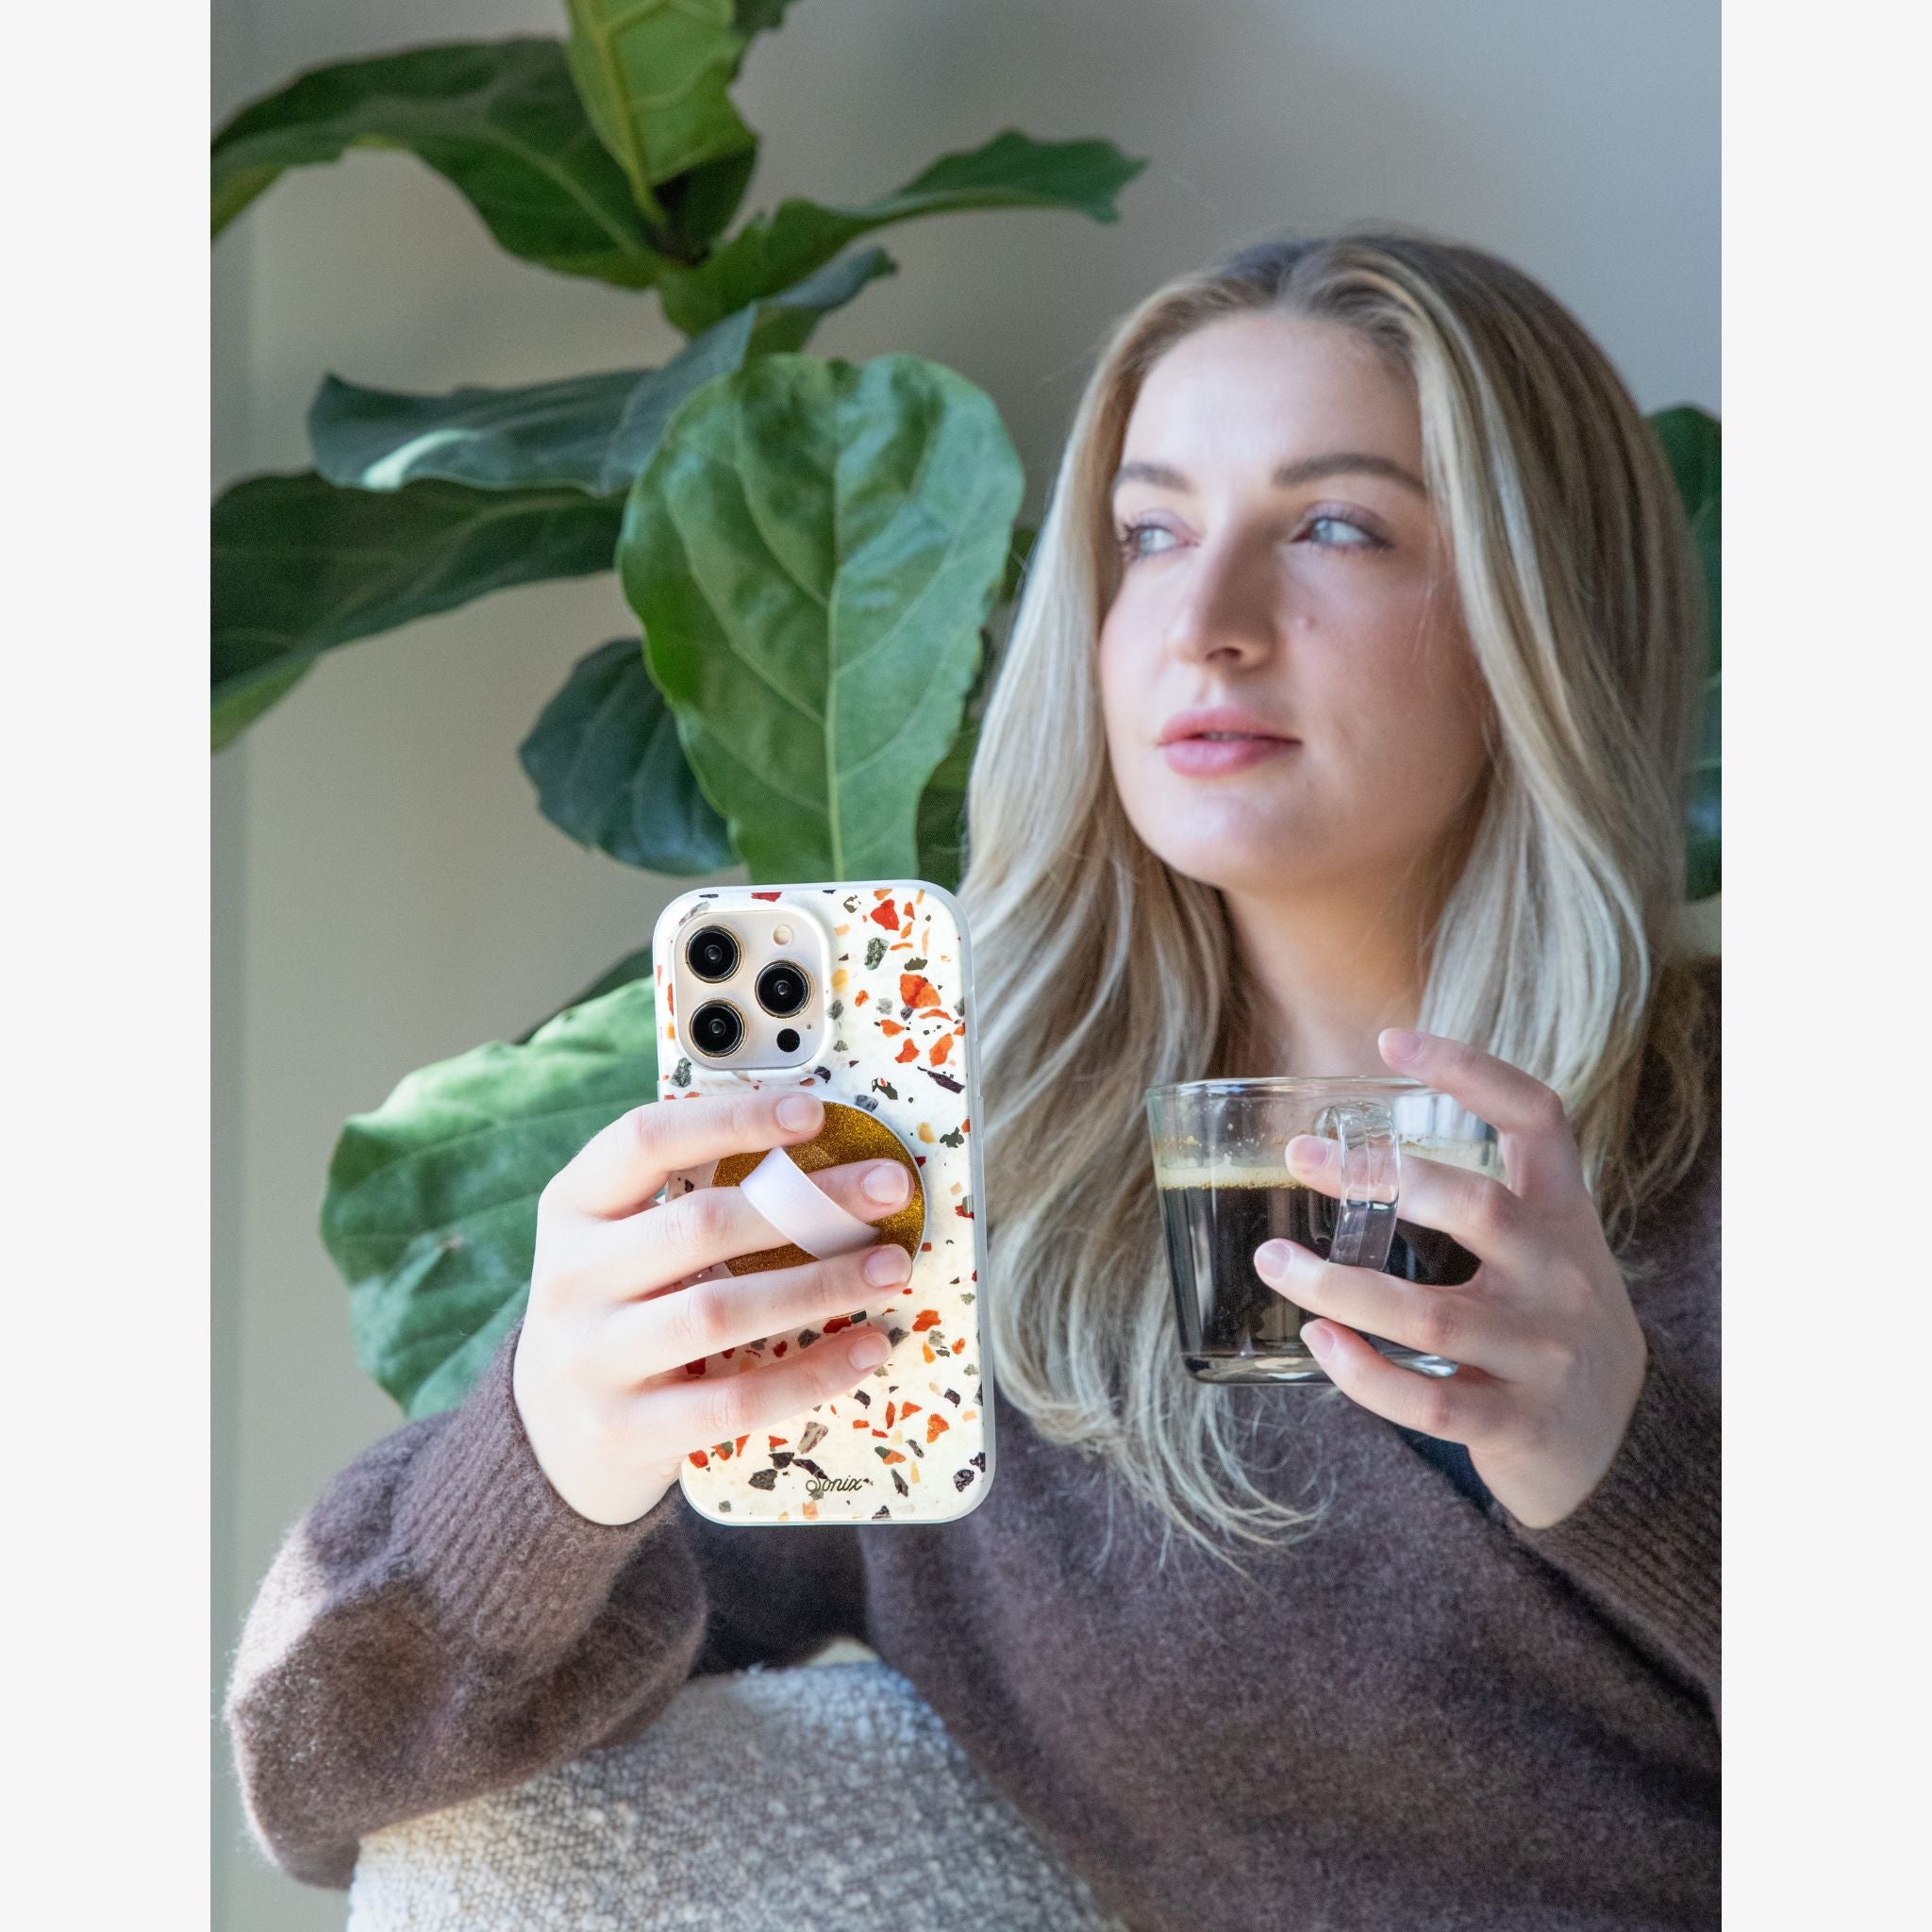 Terracotta Confetti MagSafe® Compatible iPhone Case